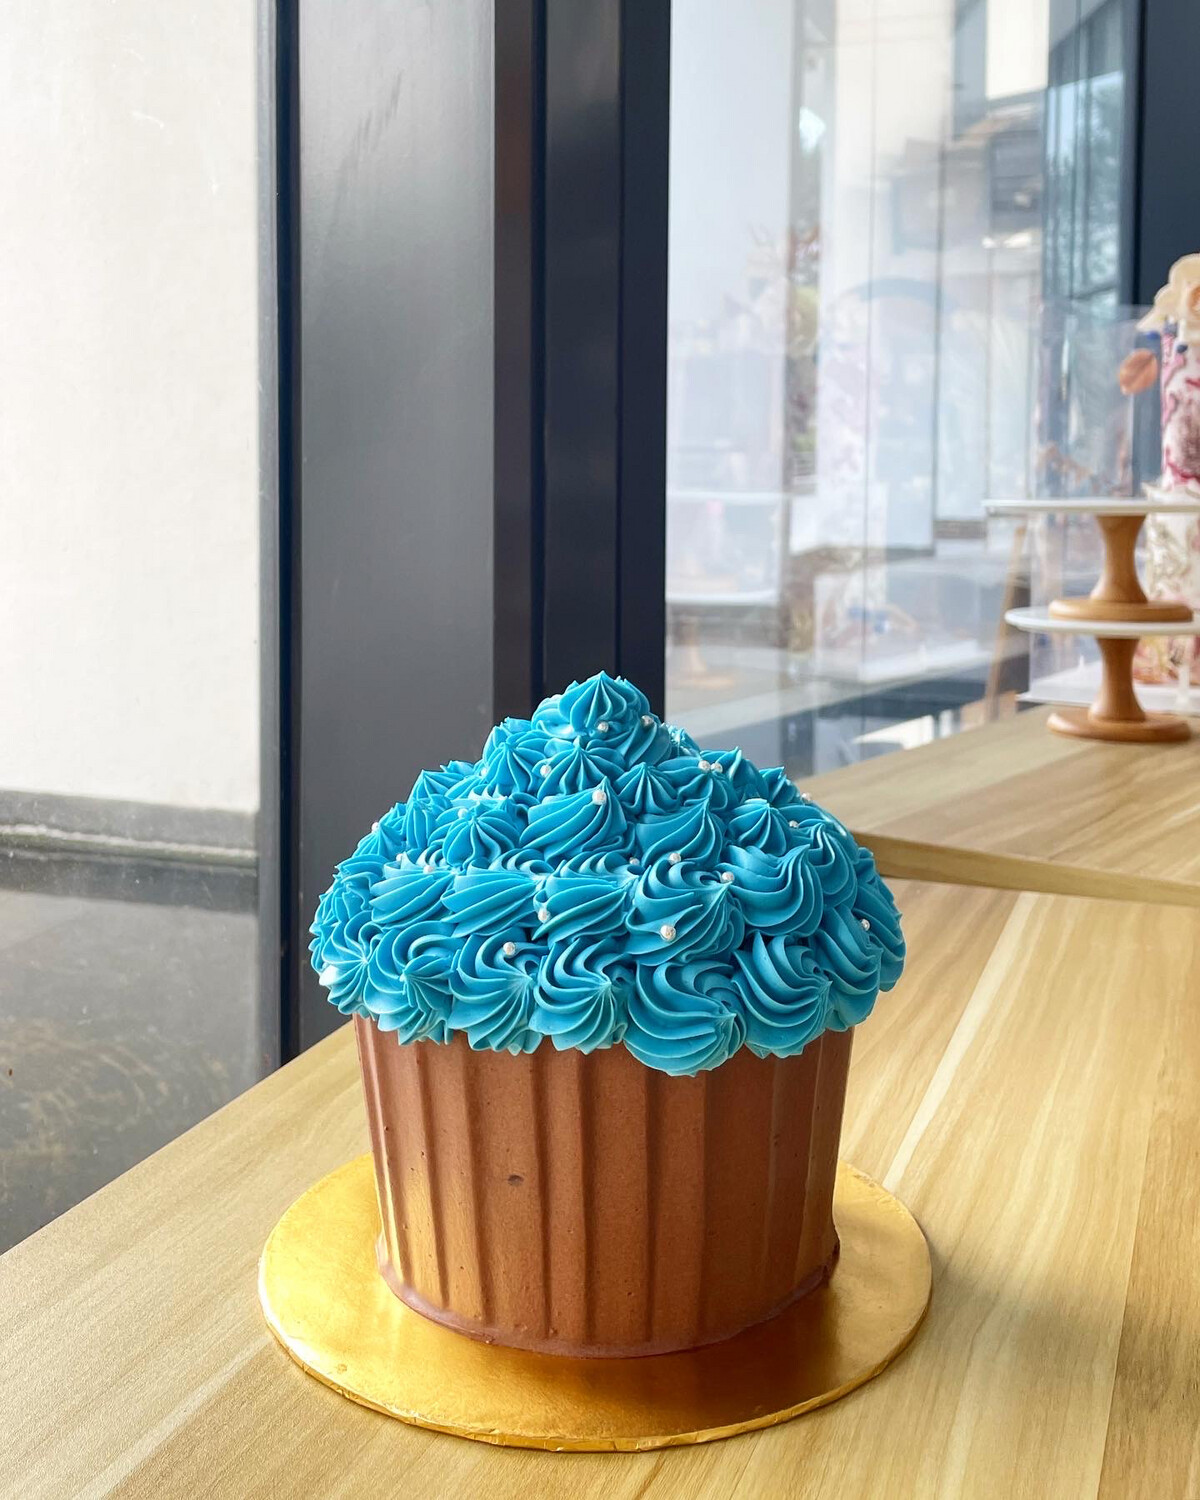 Giant 3D Cupcake Cake